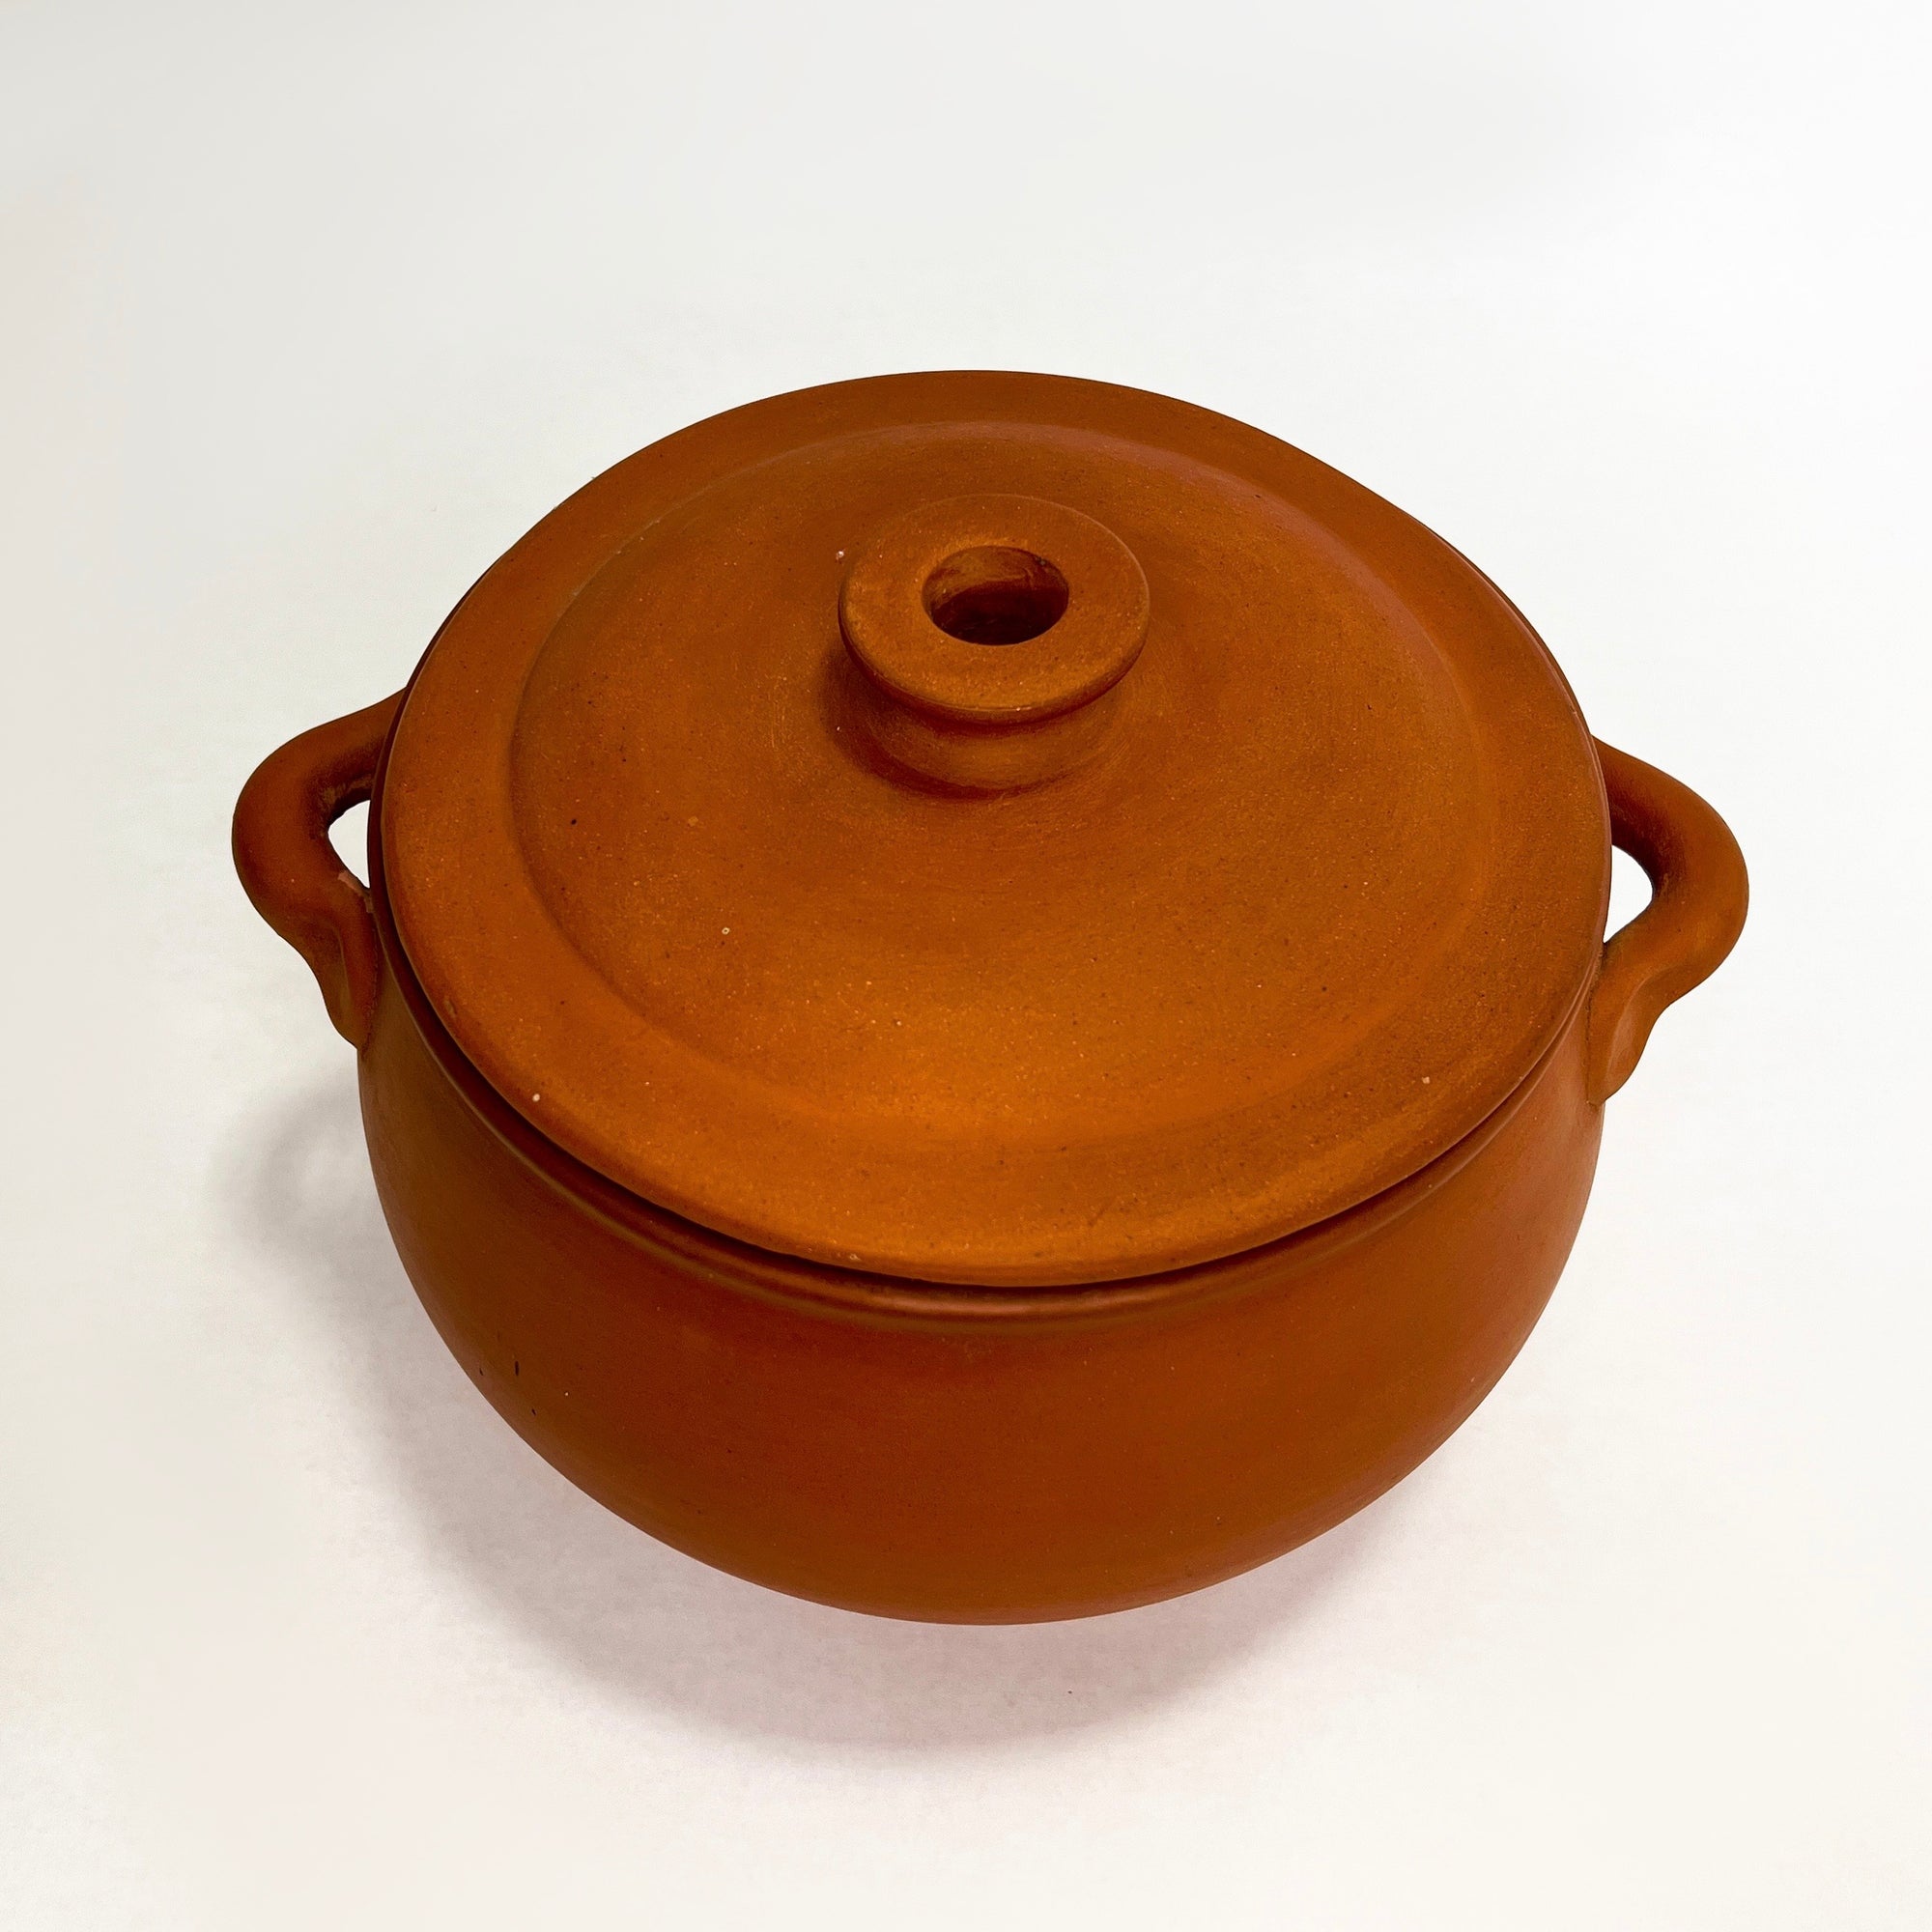 Egyptian Terra Cotta Stew Pot